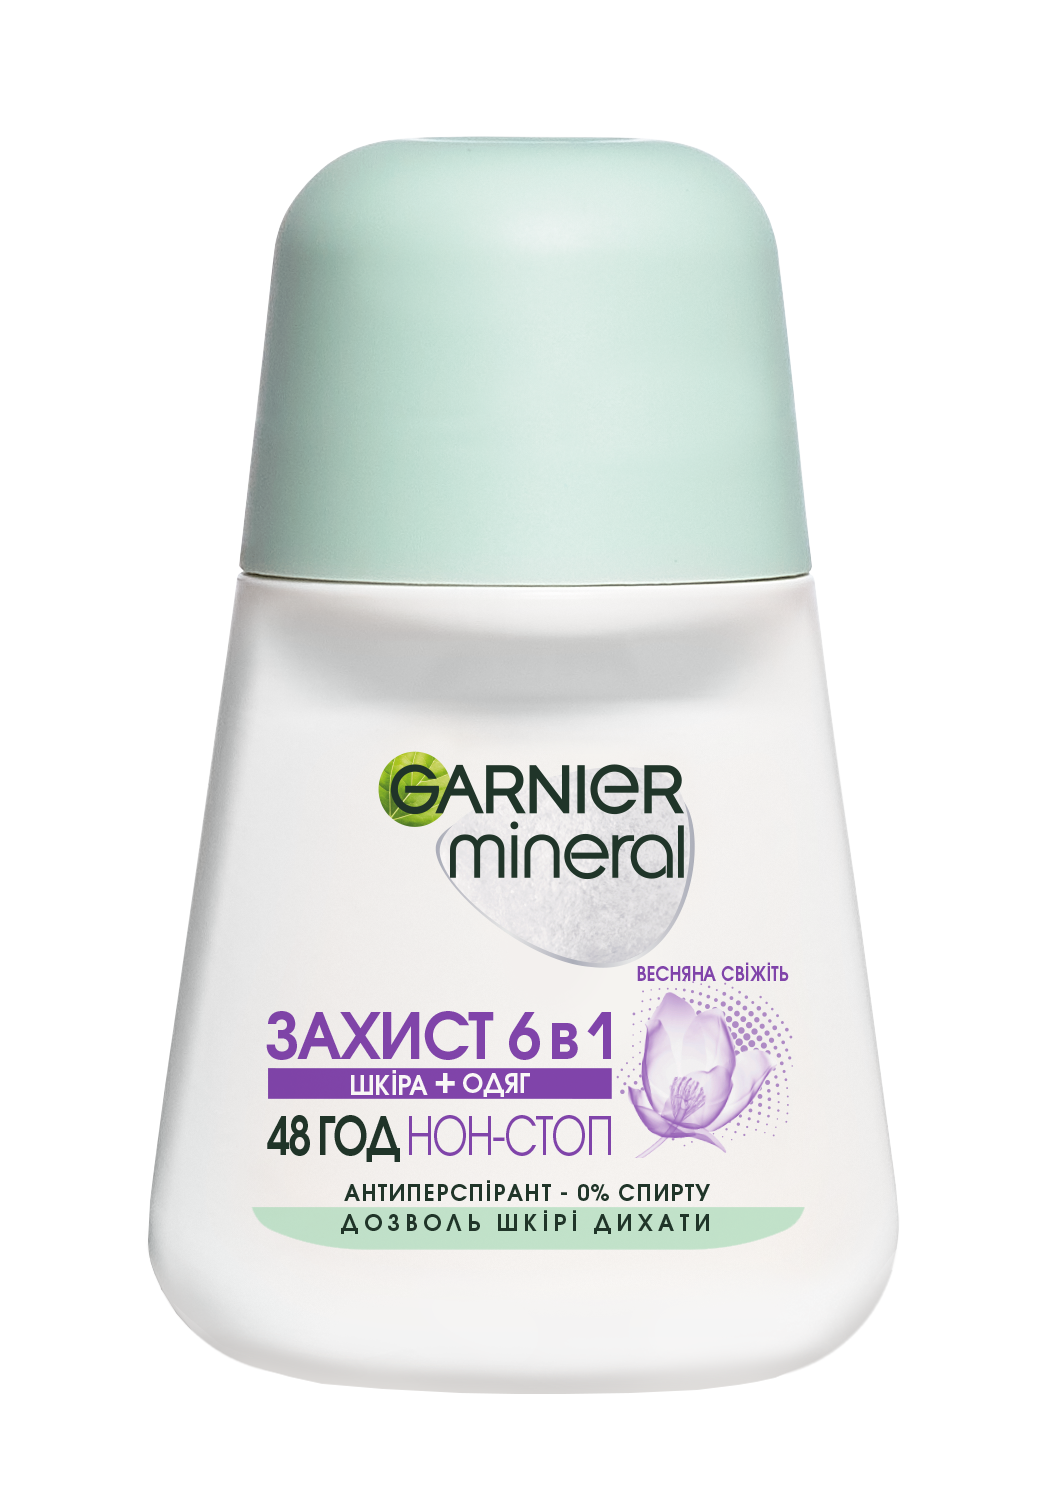 Дезодорант-антиперспирант Garnier Mineral Защита 5 Весенняя свежесть, шариковый, 50 мл - фото 1